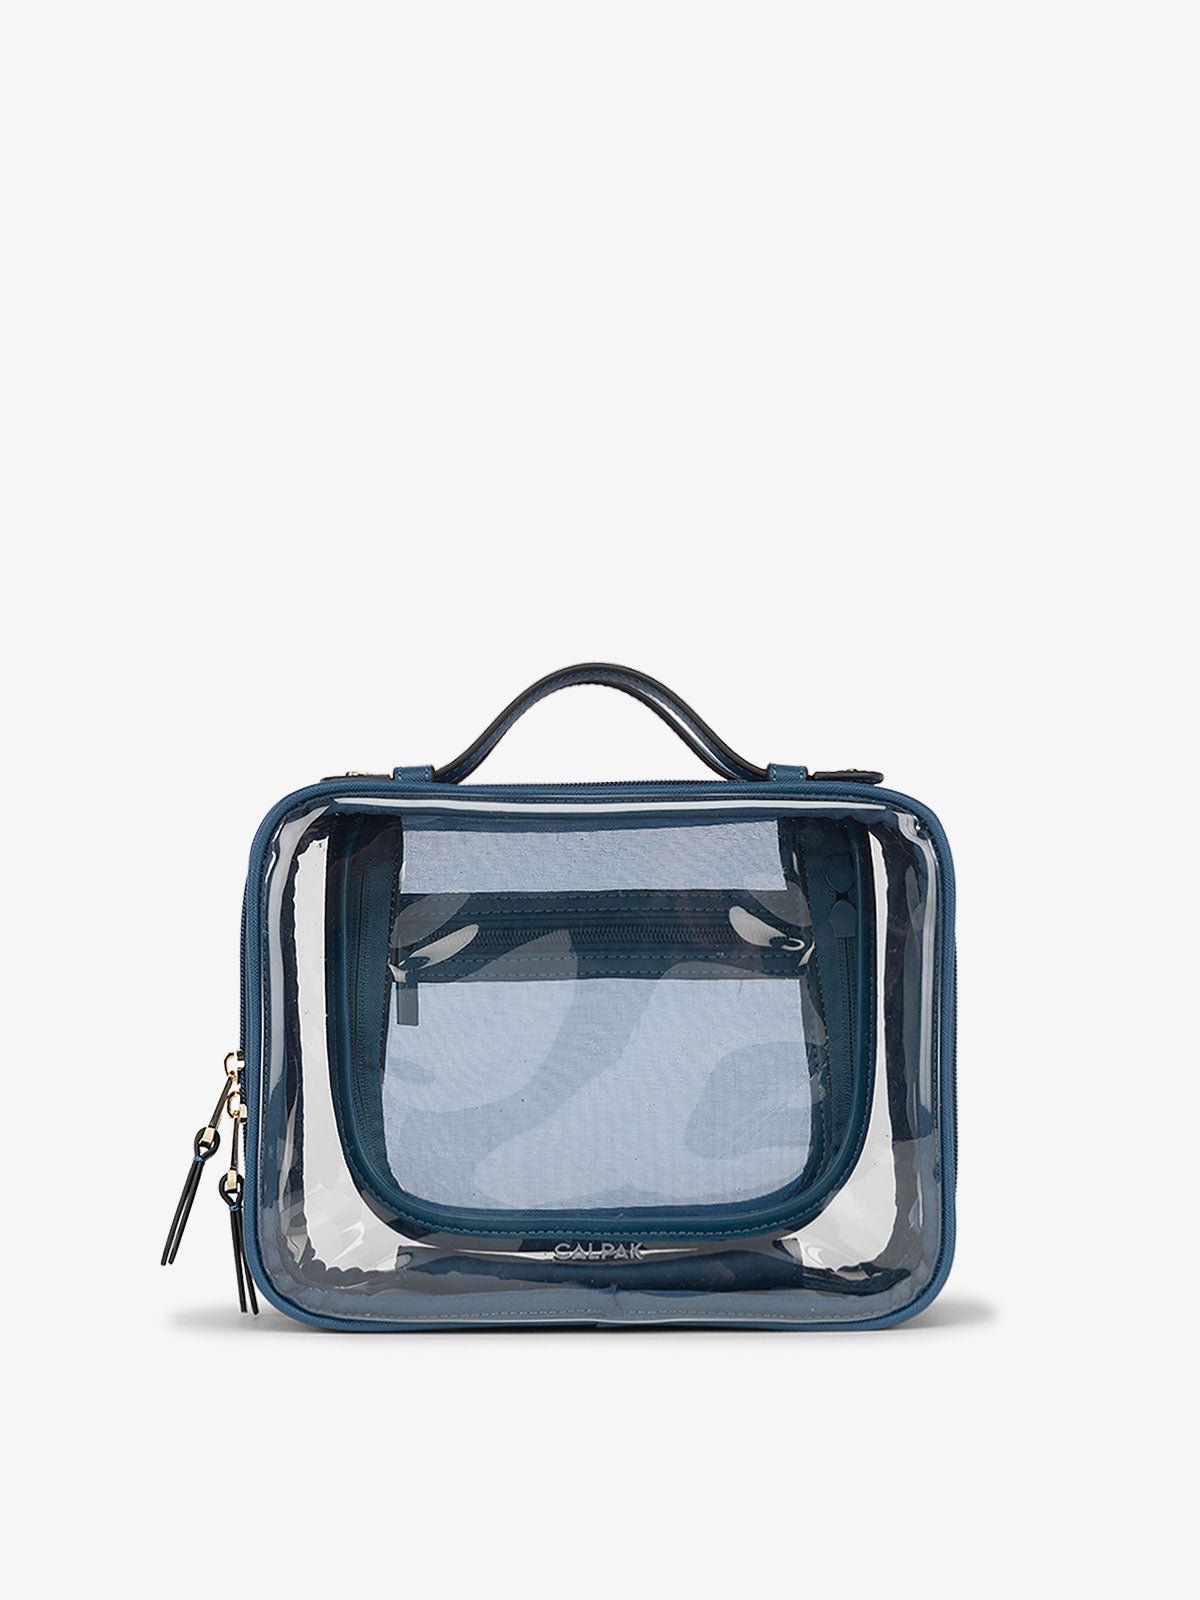 CALPAK Medium clear makeup bag with compartments in dark blue